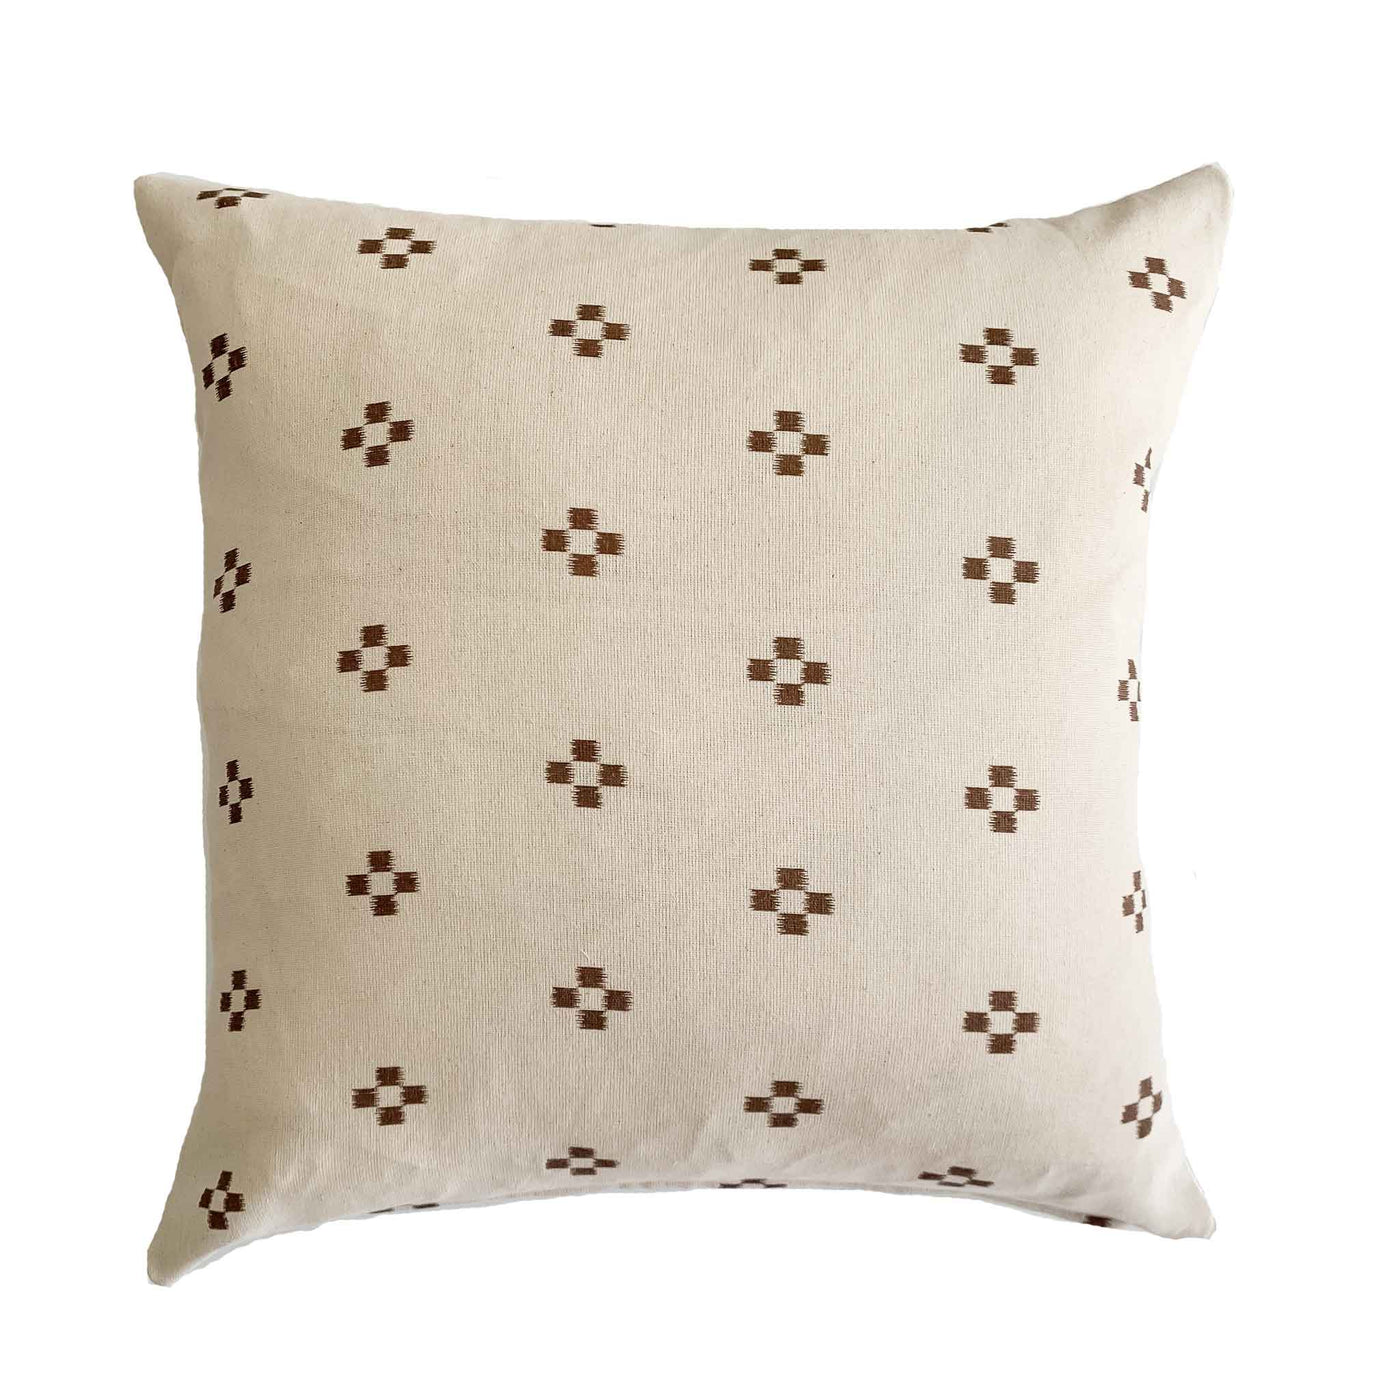 Hmong Batik Pillow Cover- Terracotta - Studio Pillows